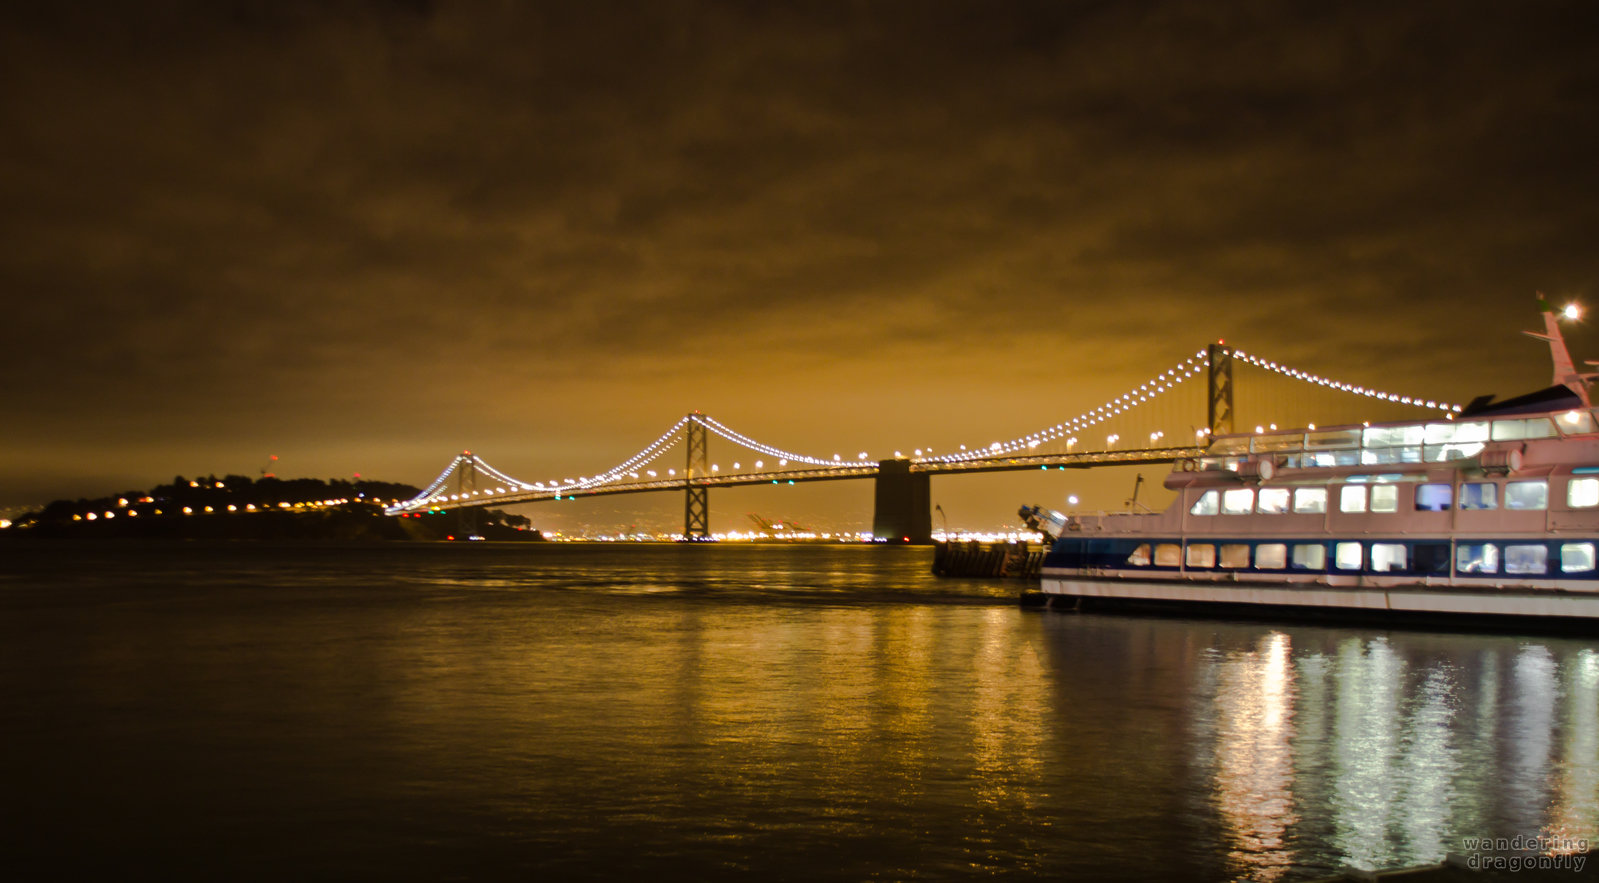 Ferry is preparing to leave -- bridge, night, ship, water